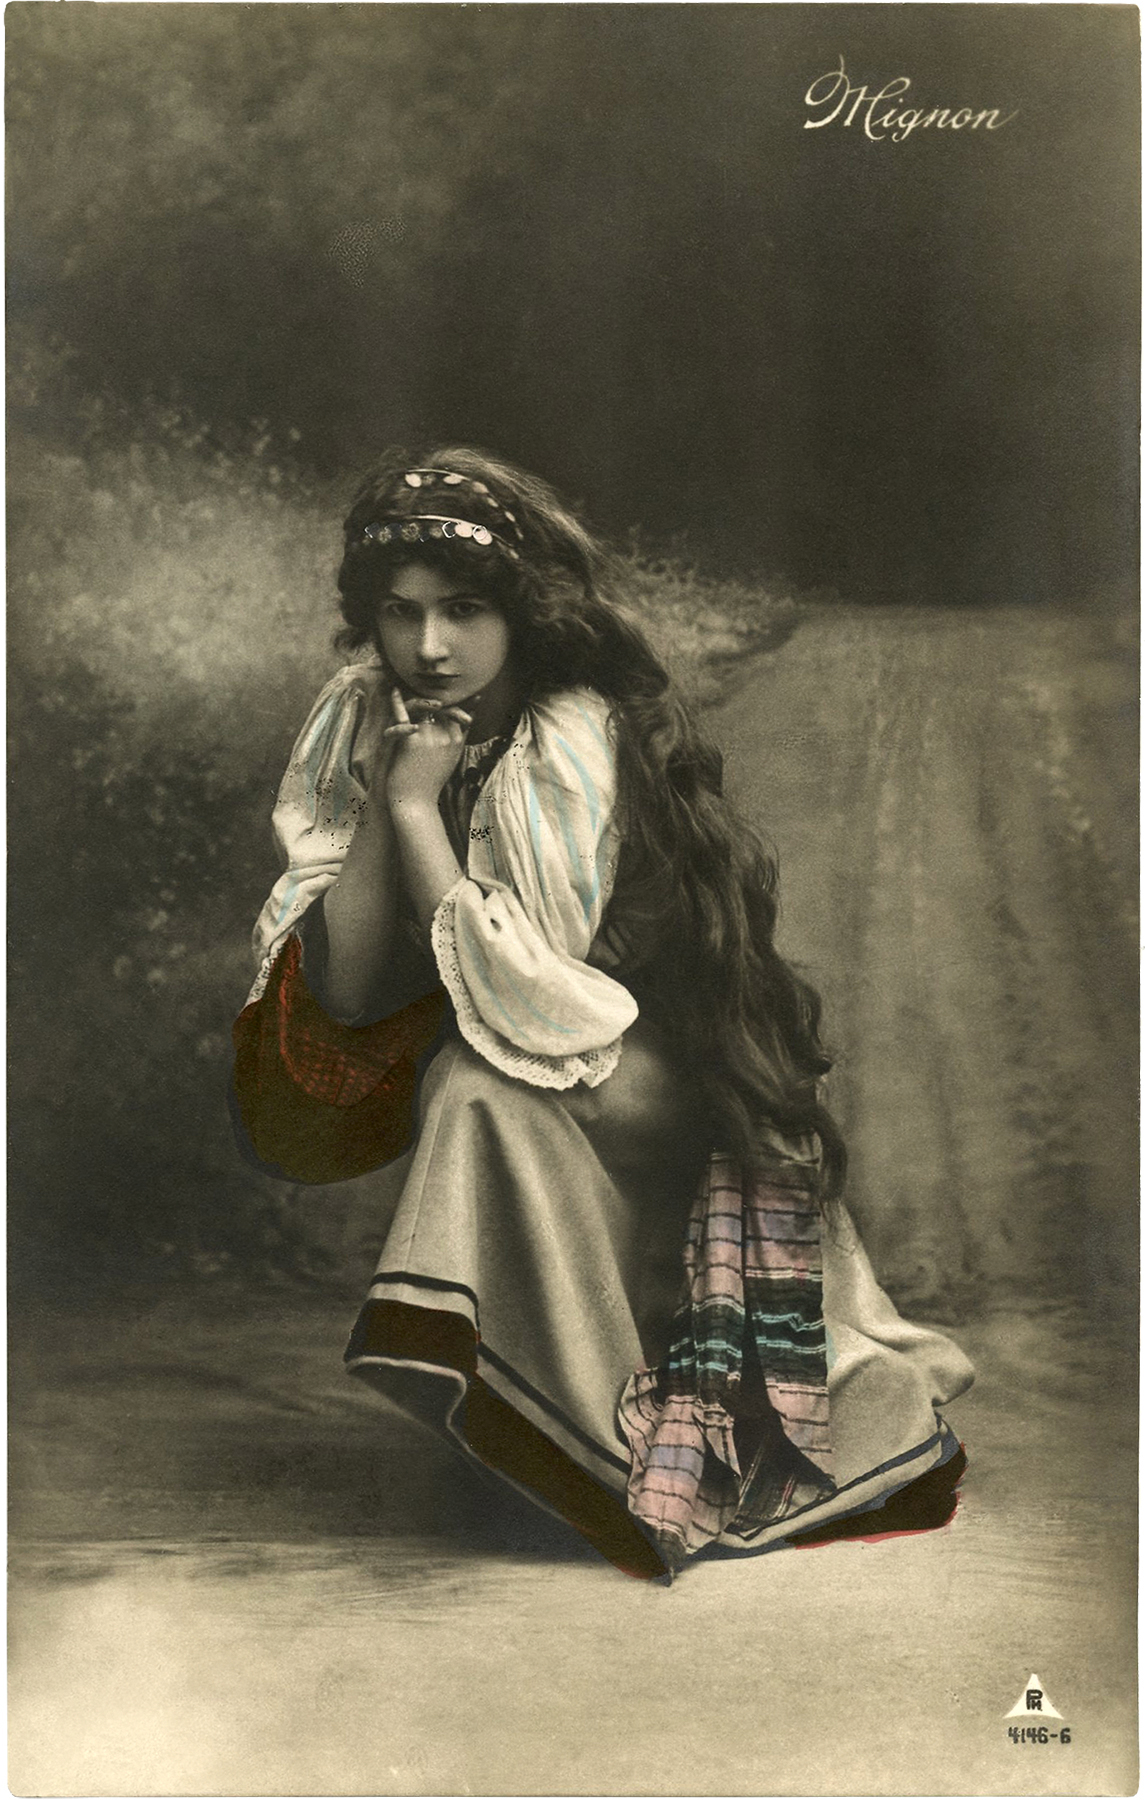 vintage gypsy photography